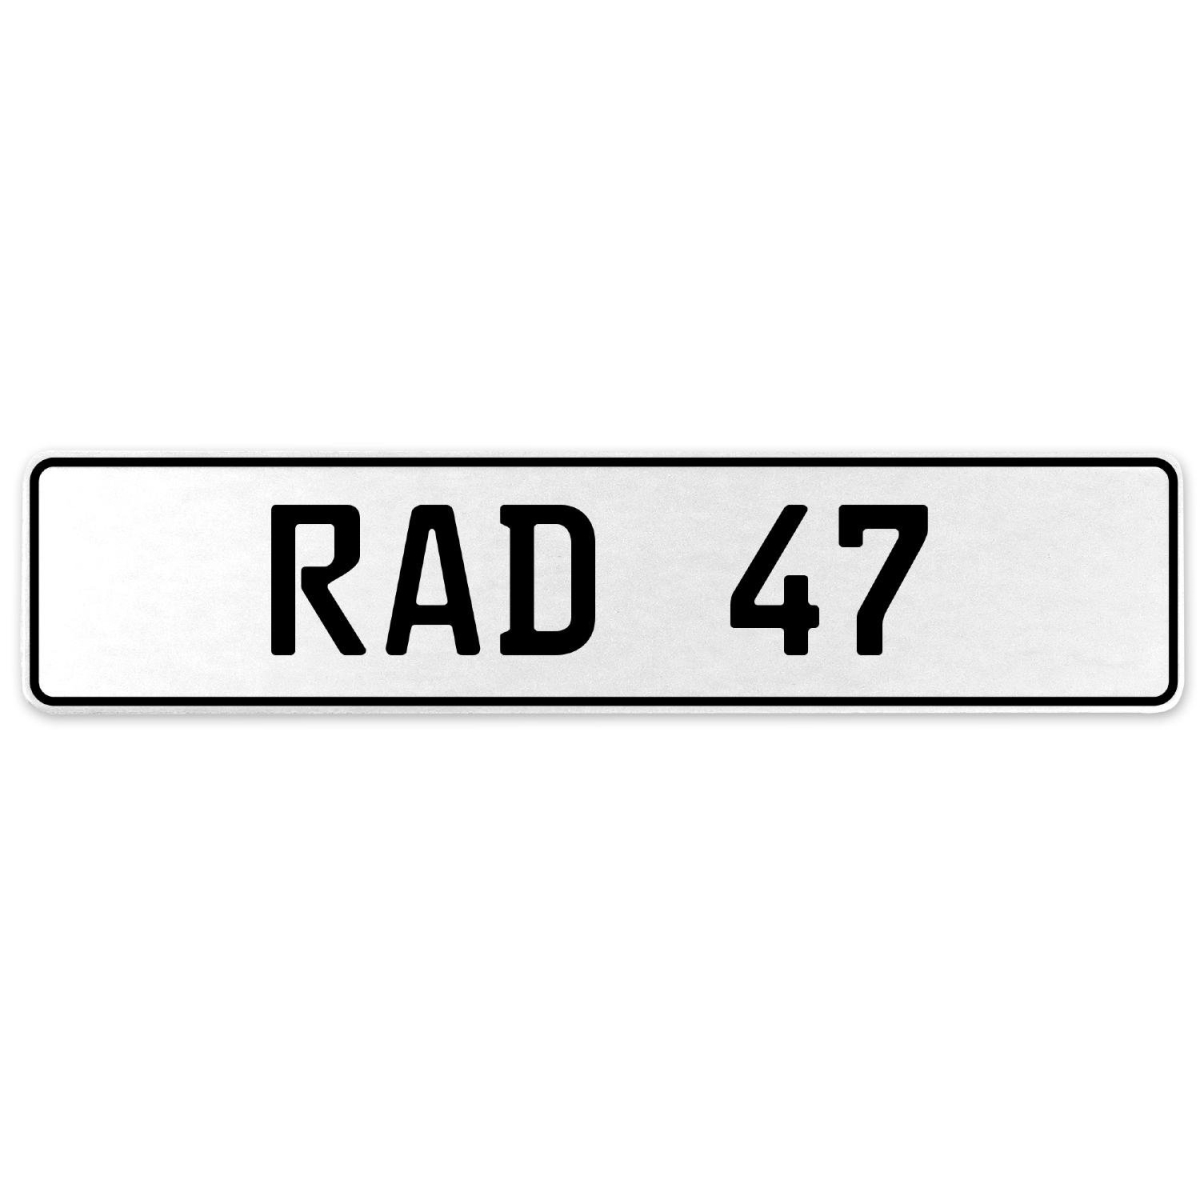 553951 Rad 47 - White Aluminum Street Sign Mancave Euro Plate Name Door Sign Wall Art